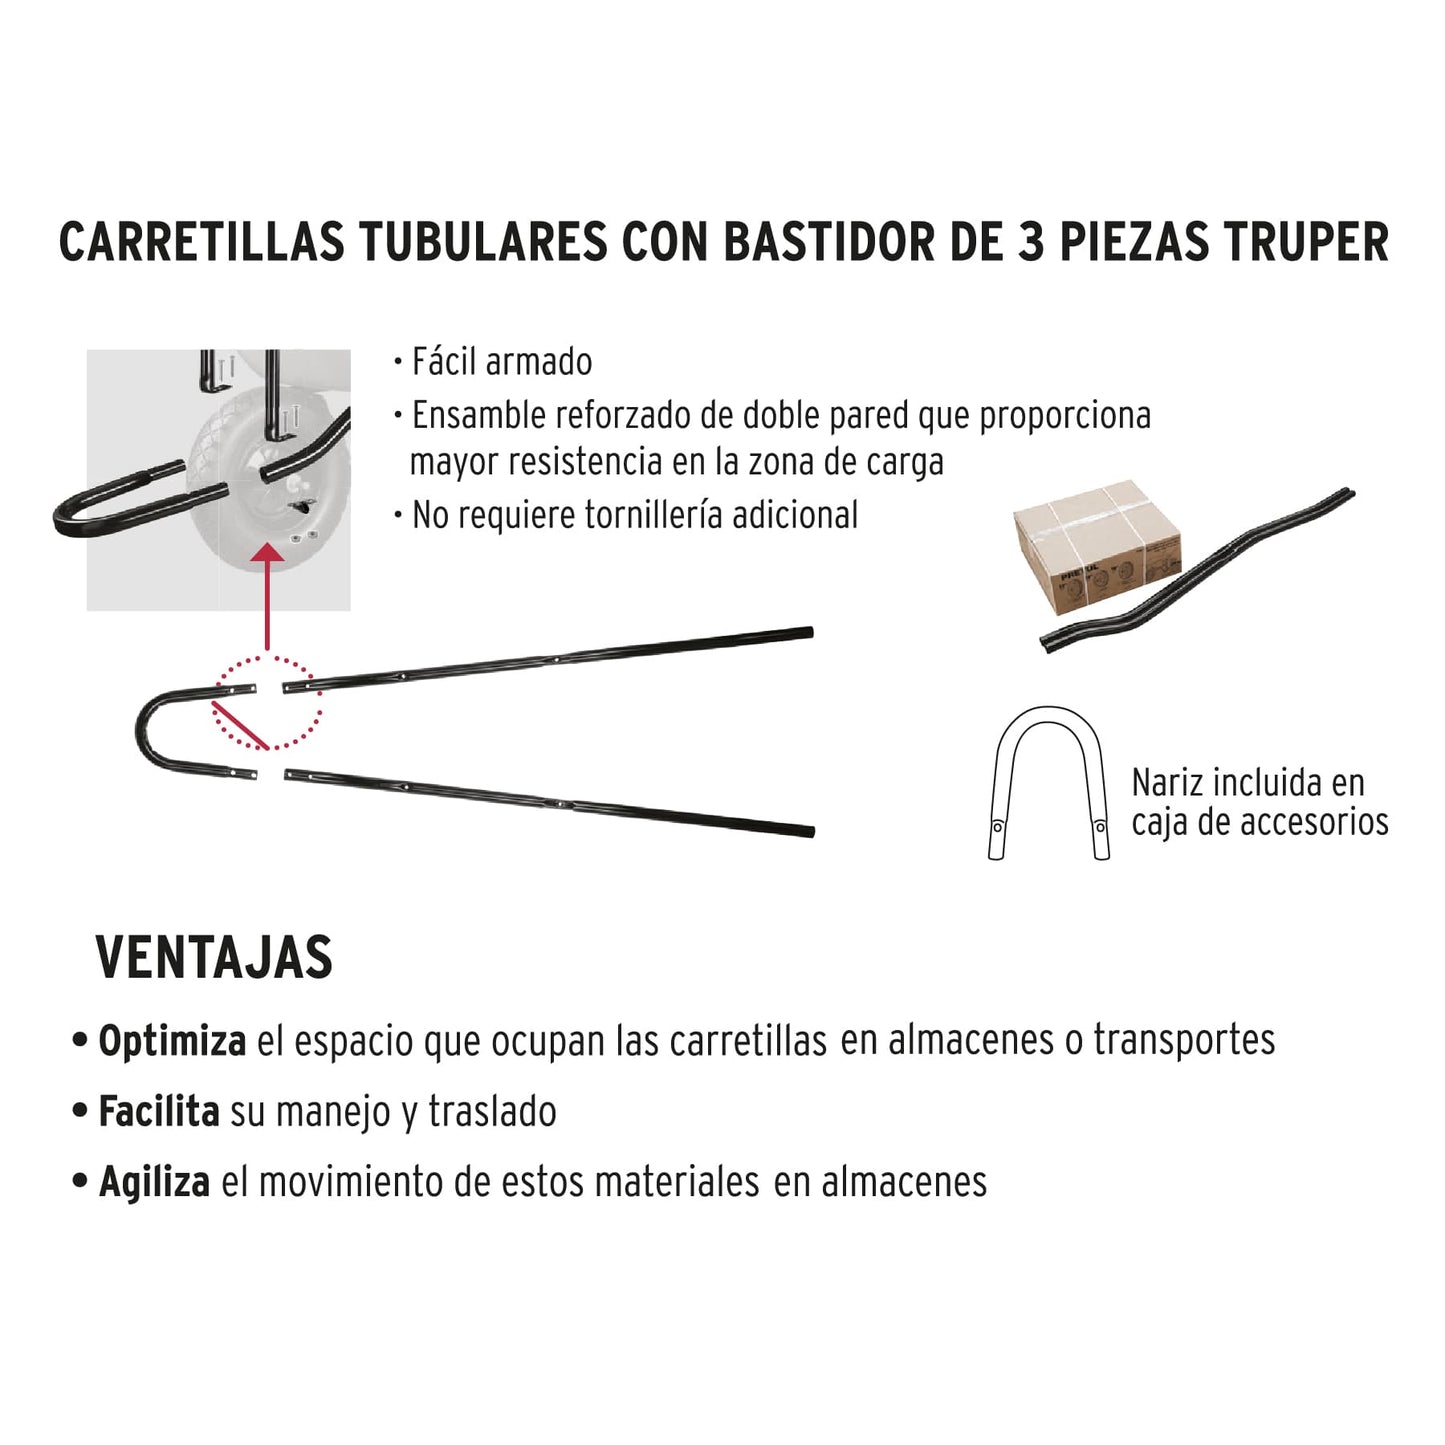 Carretilla 6ft3 Imponchable, bastidor tubular, Truper Expert